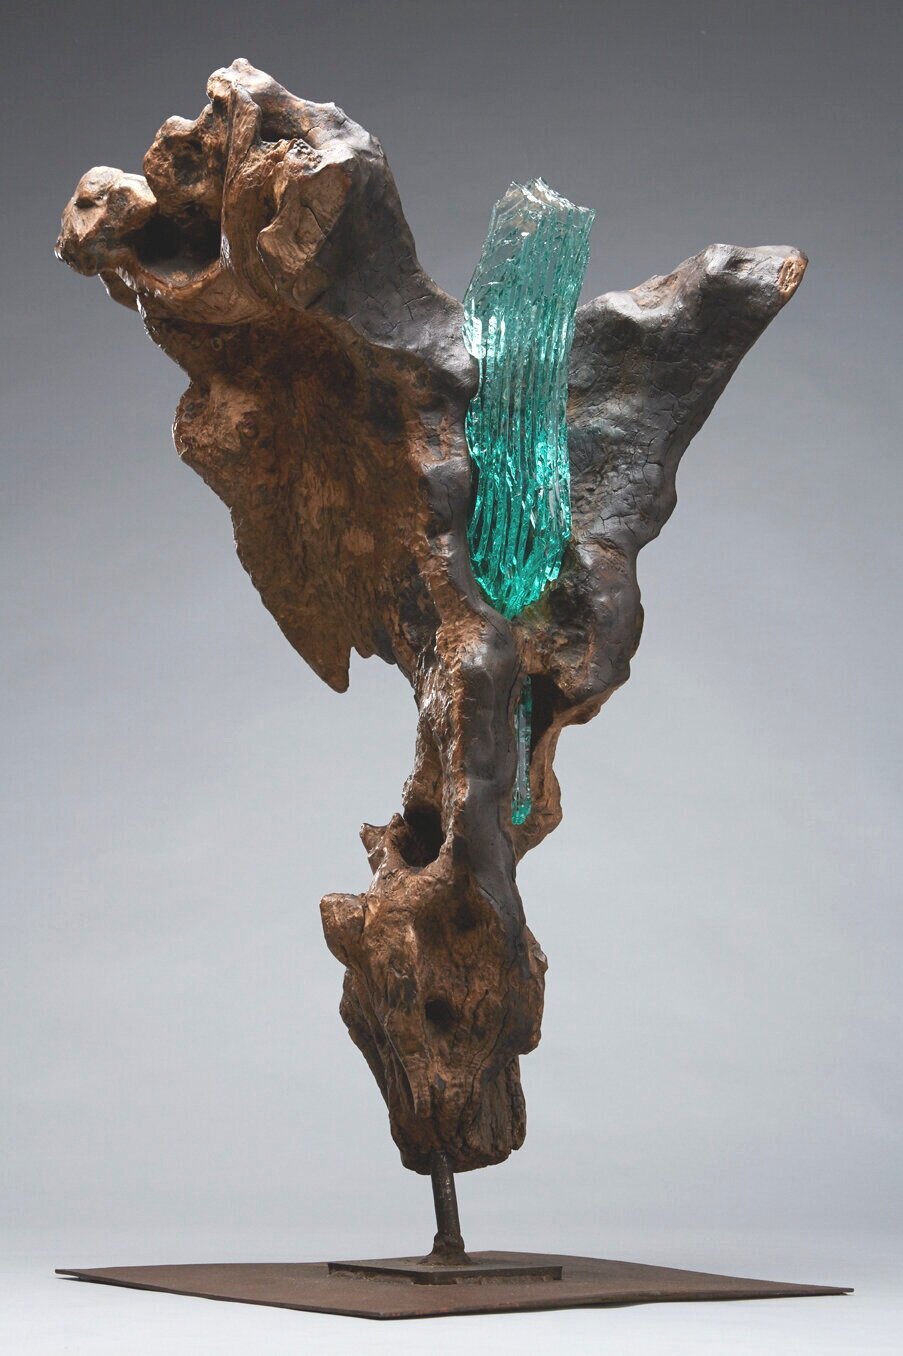 Sculptures contemporaines en bois, verre & métal - Bernard Froment -  Sculpteur d'art